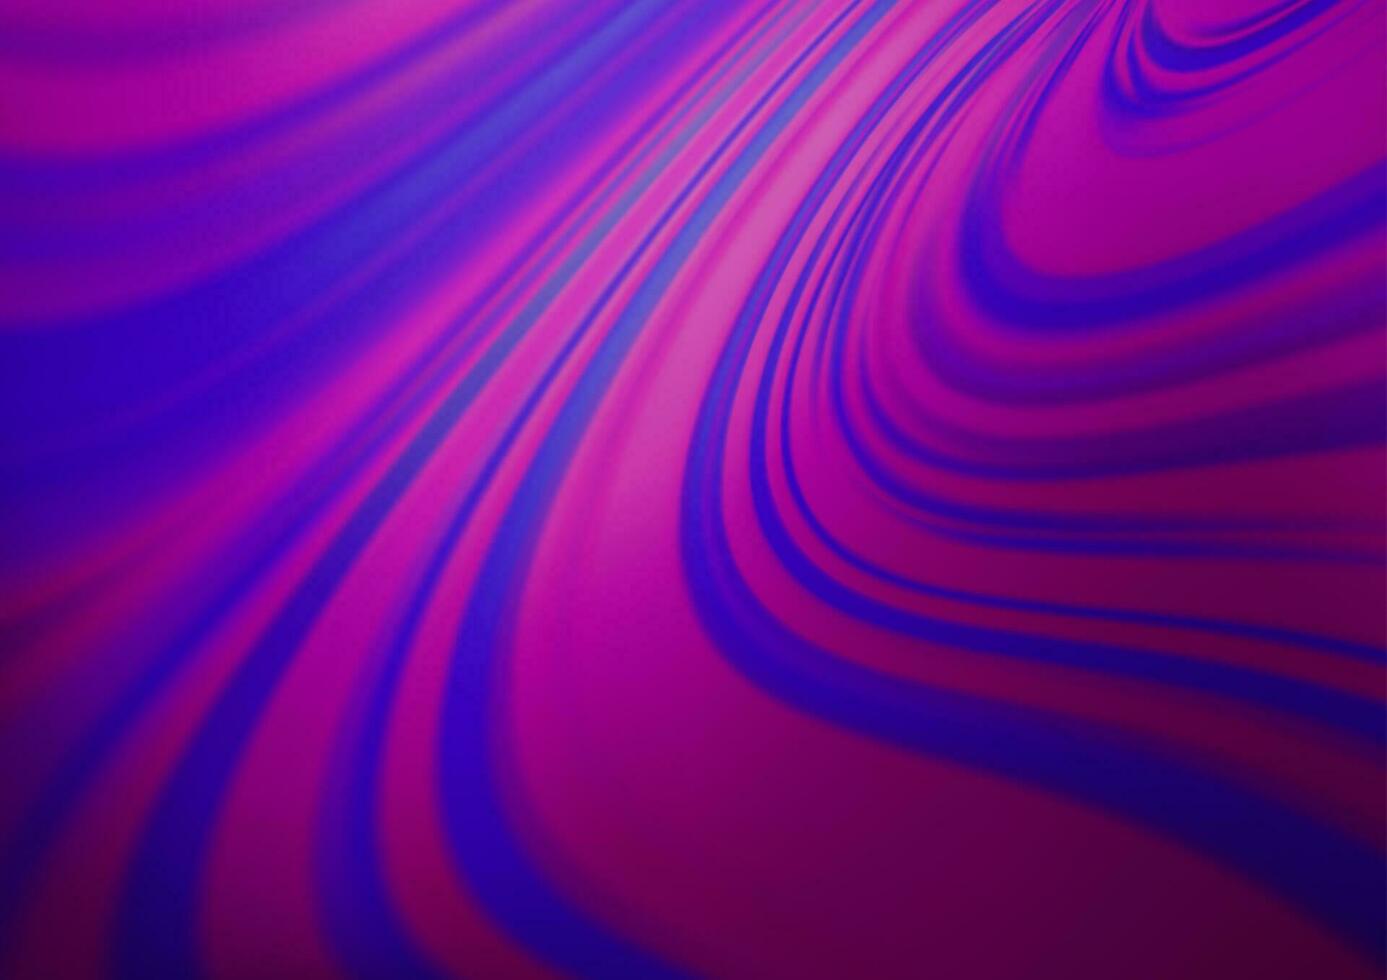 plantilla brillante abstracta de vector púrpura claro.